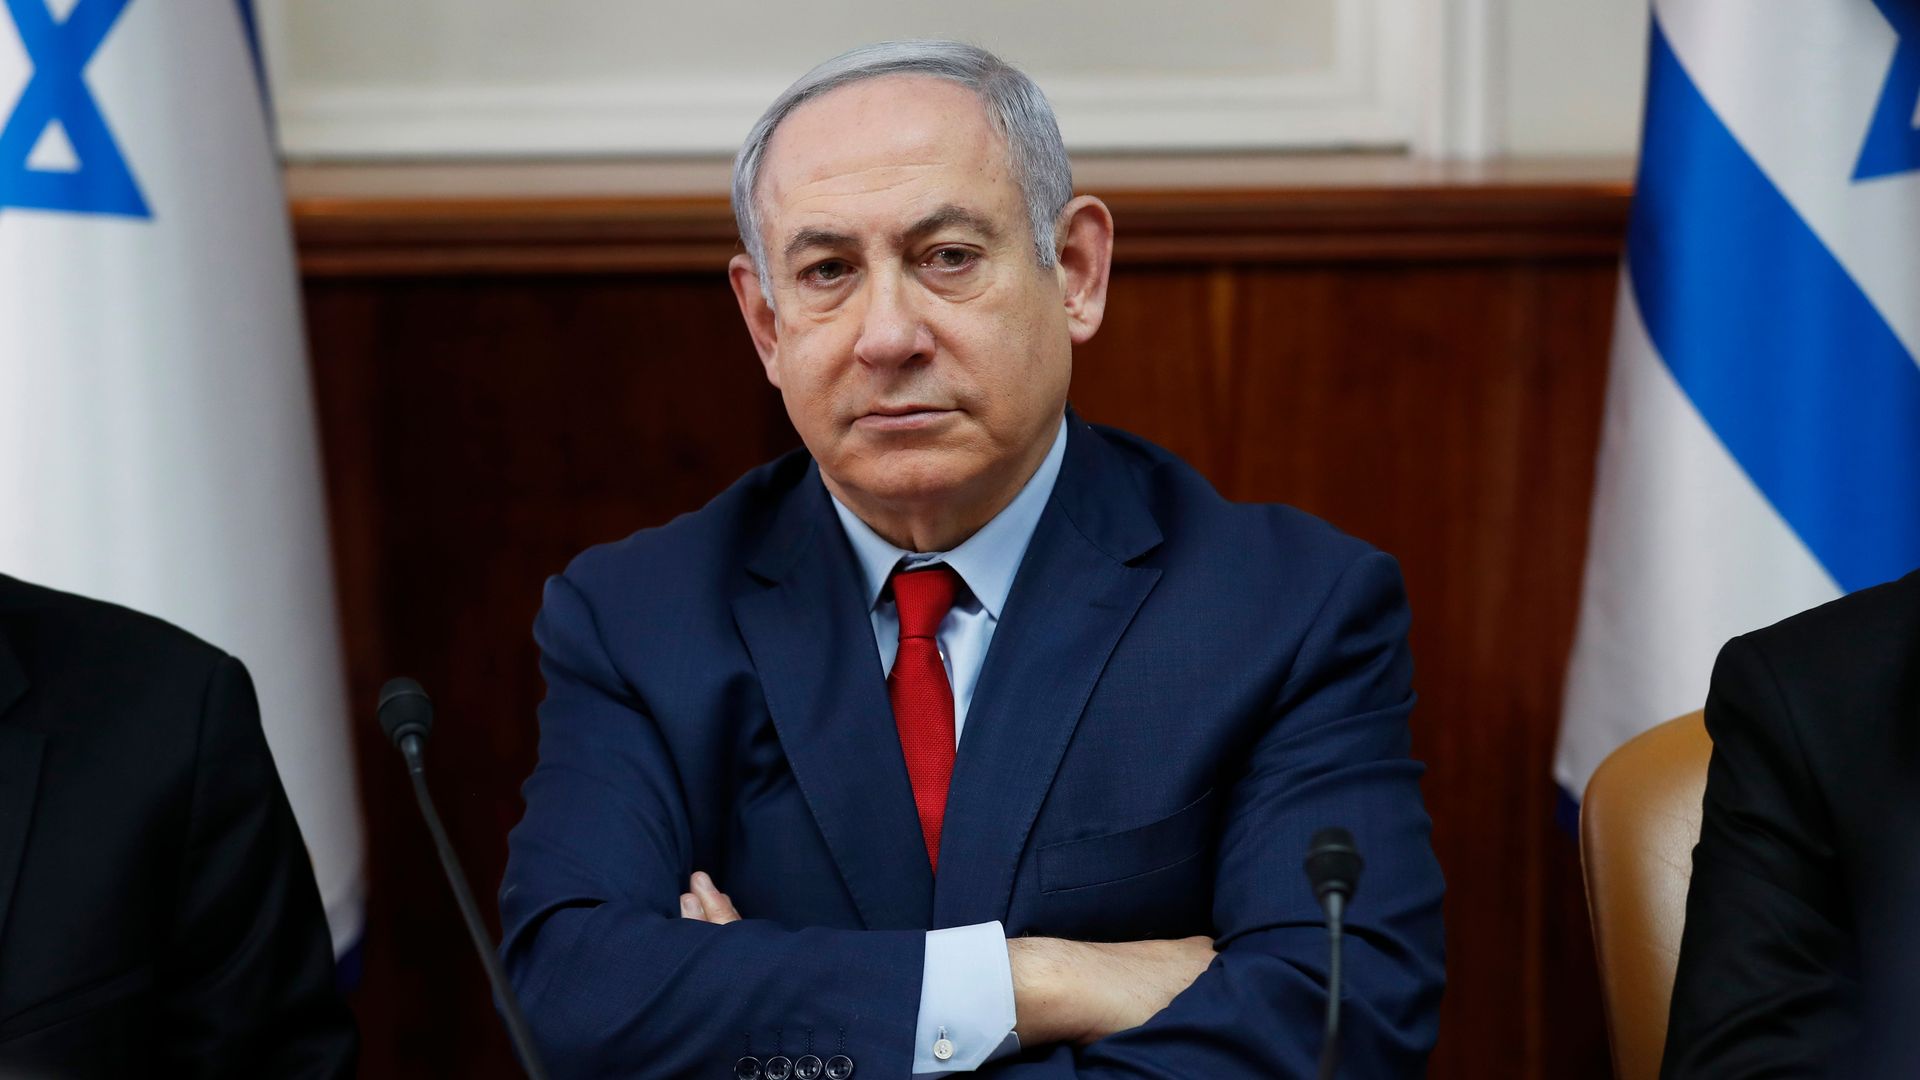 Benjamin Netanyahu with his arms folded